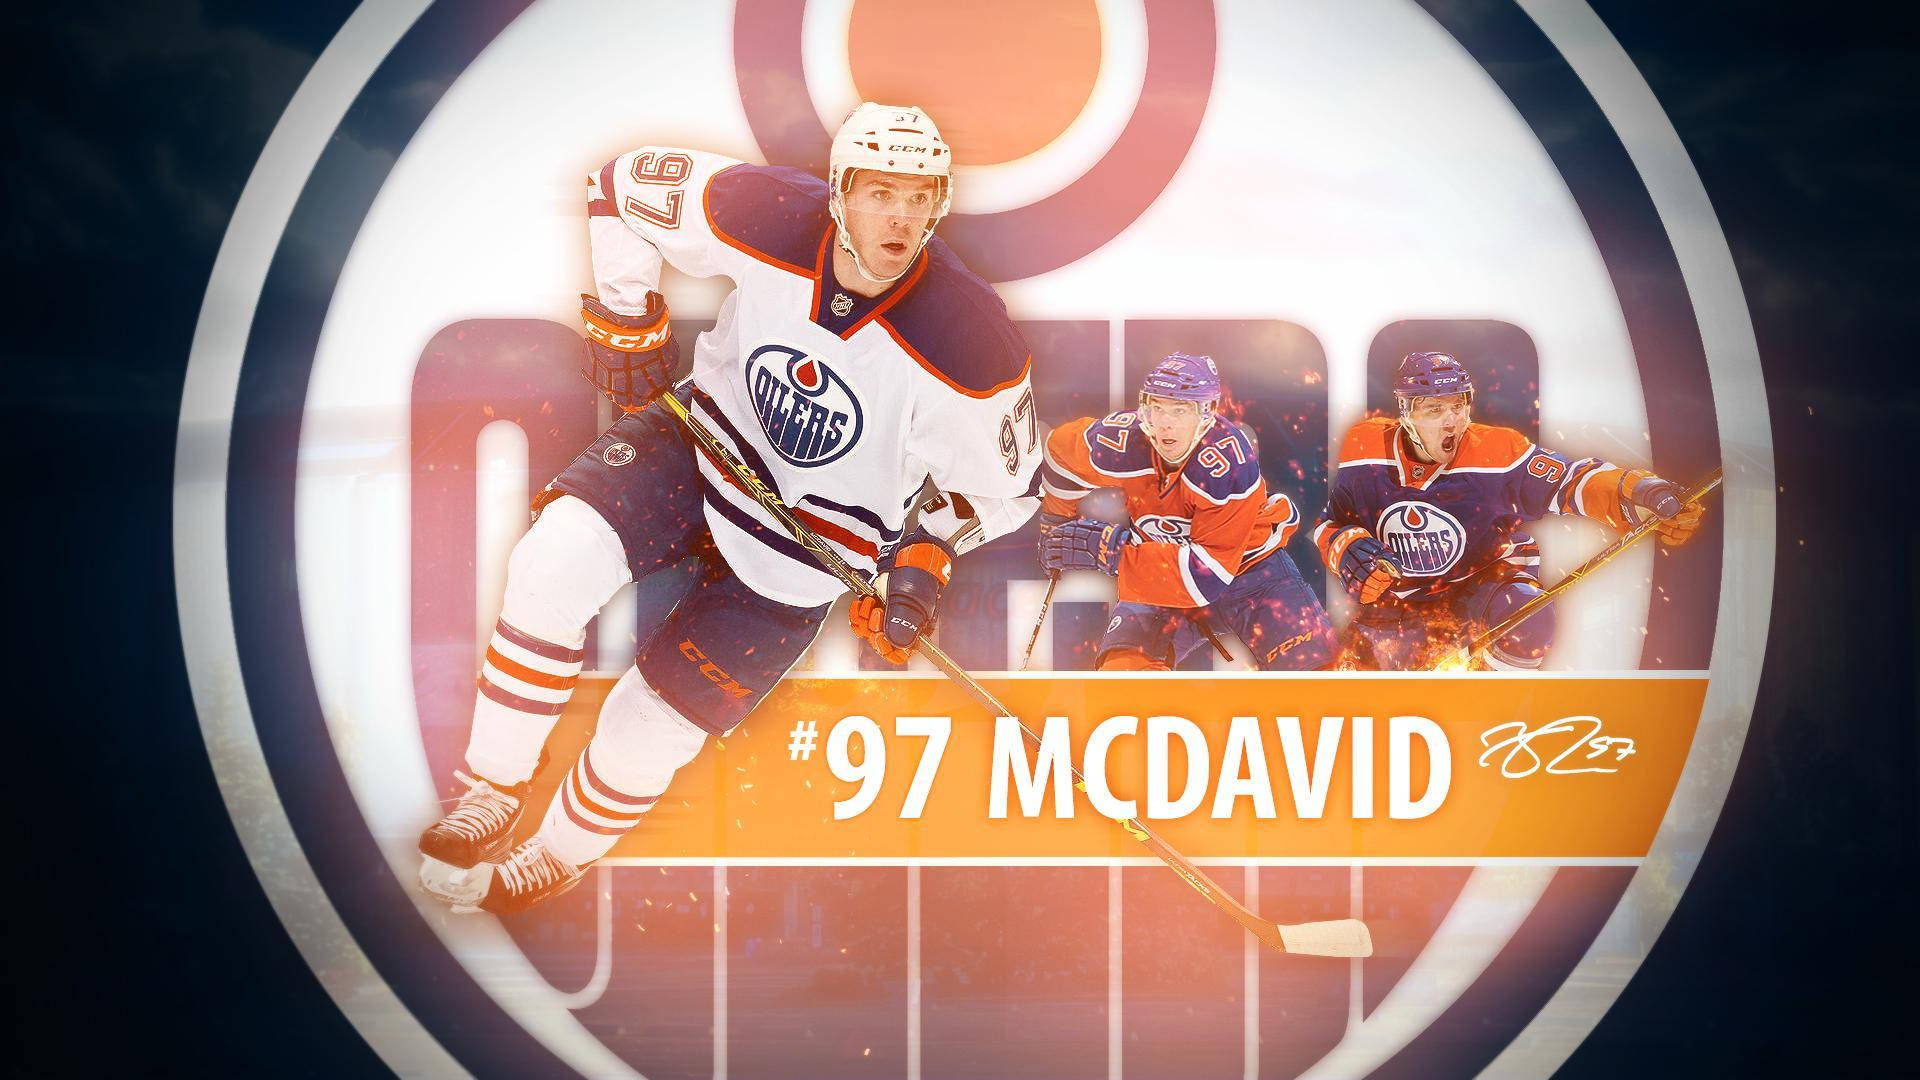 Connor Mcdavid, en professionel ishockeyspiller, fejrer alle på dit skrivebord Wallpaper